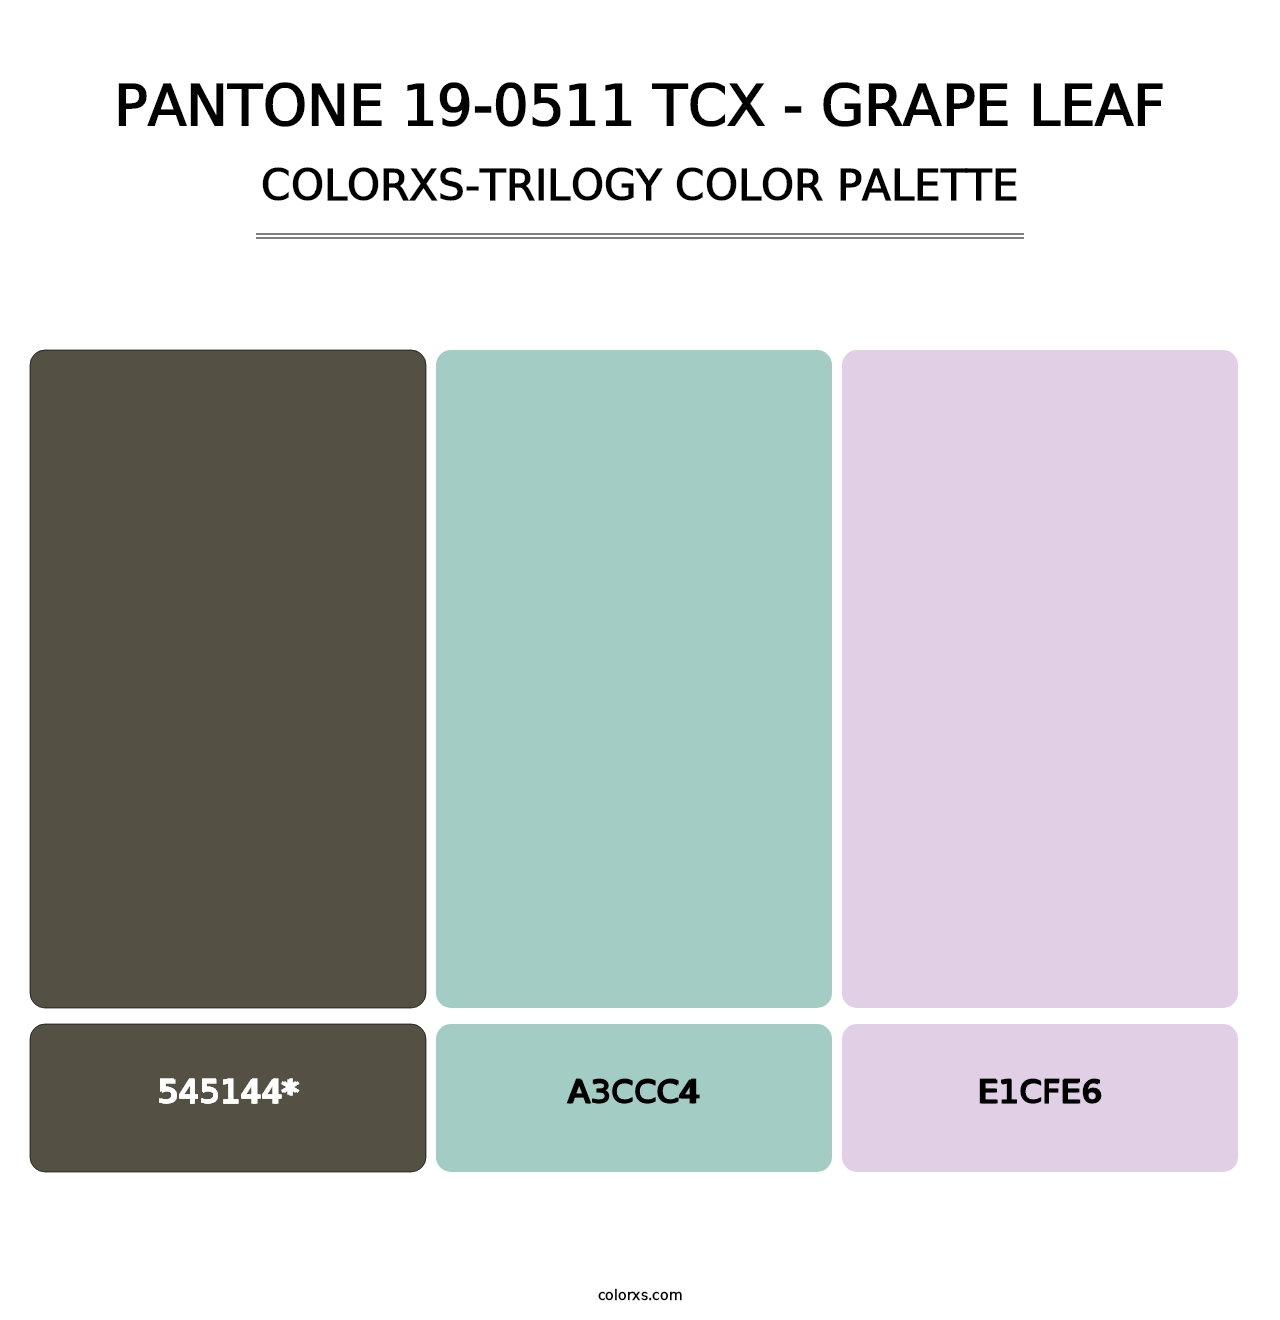 PANTONE 19-0511 TCX - Grape Leaf - Colorxs Trilogy Palette